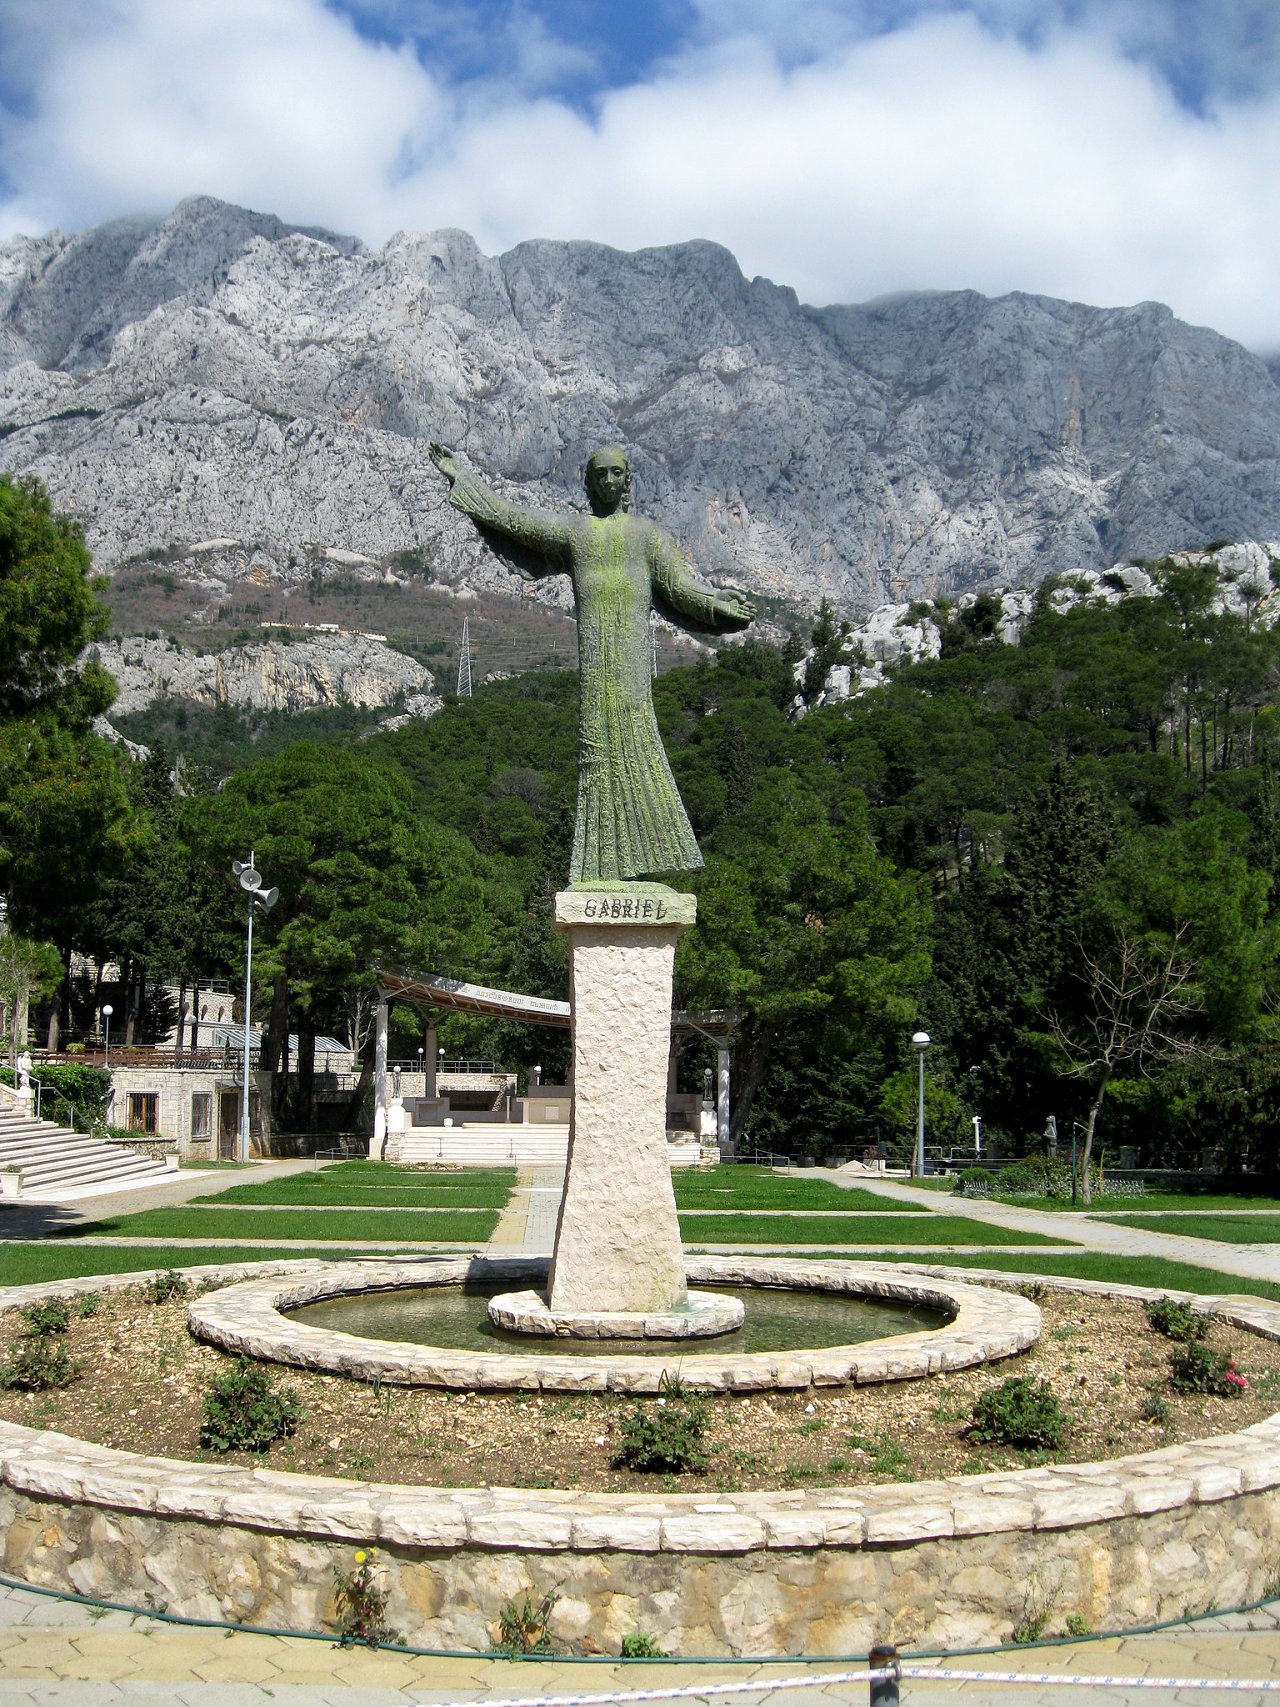 Vepric – Shrine of Our Lady of Lourdes, Makarska, Croatia